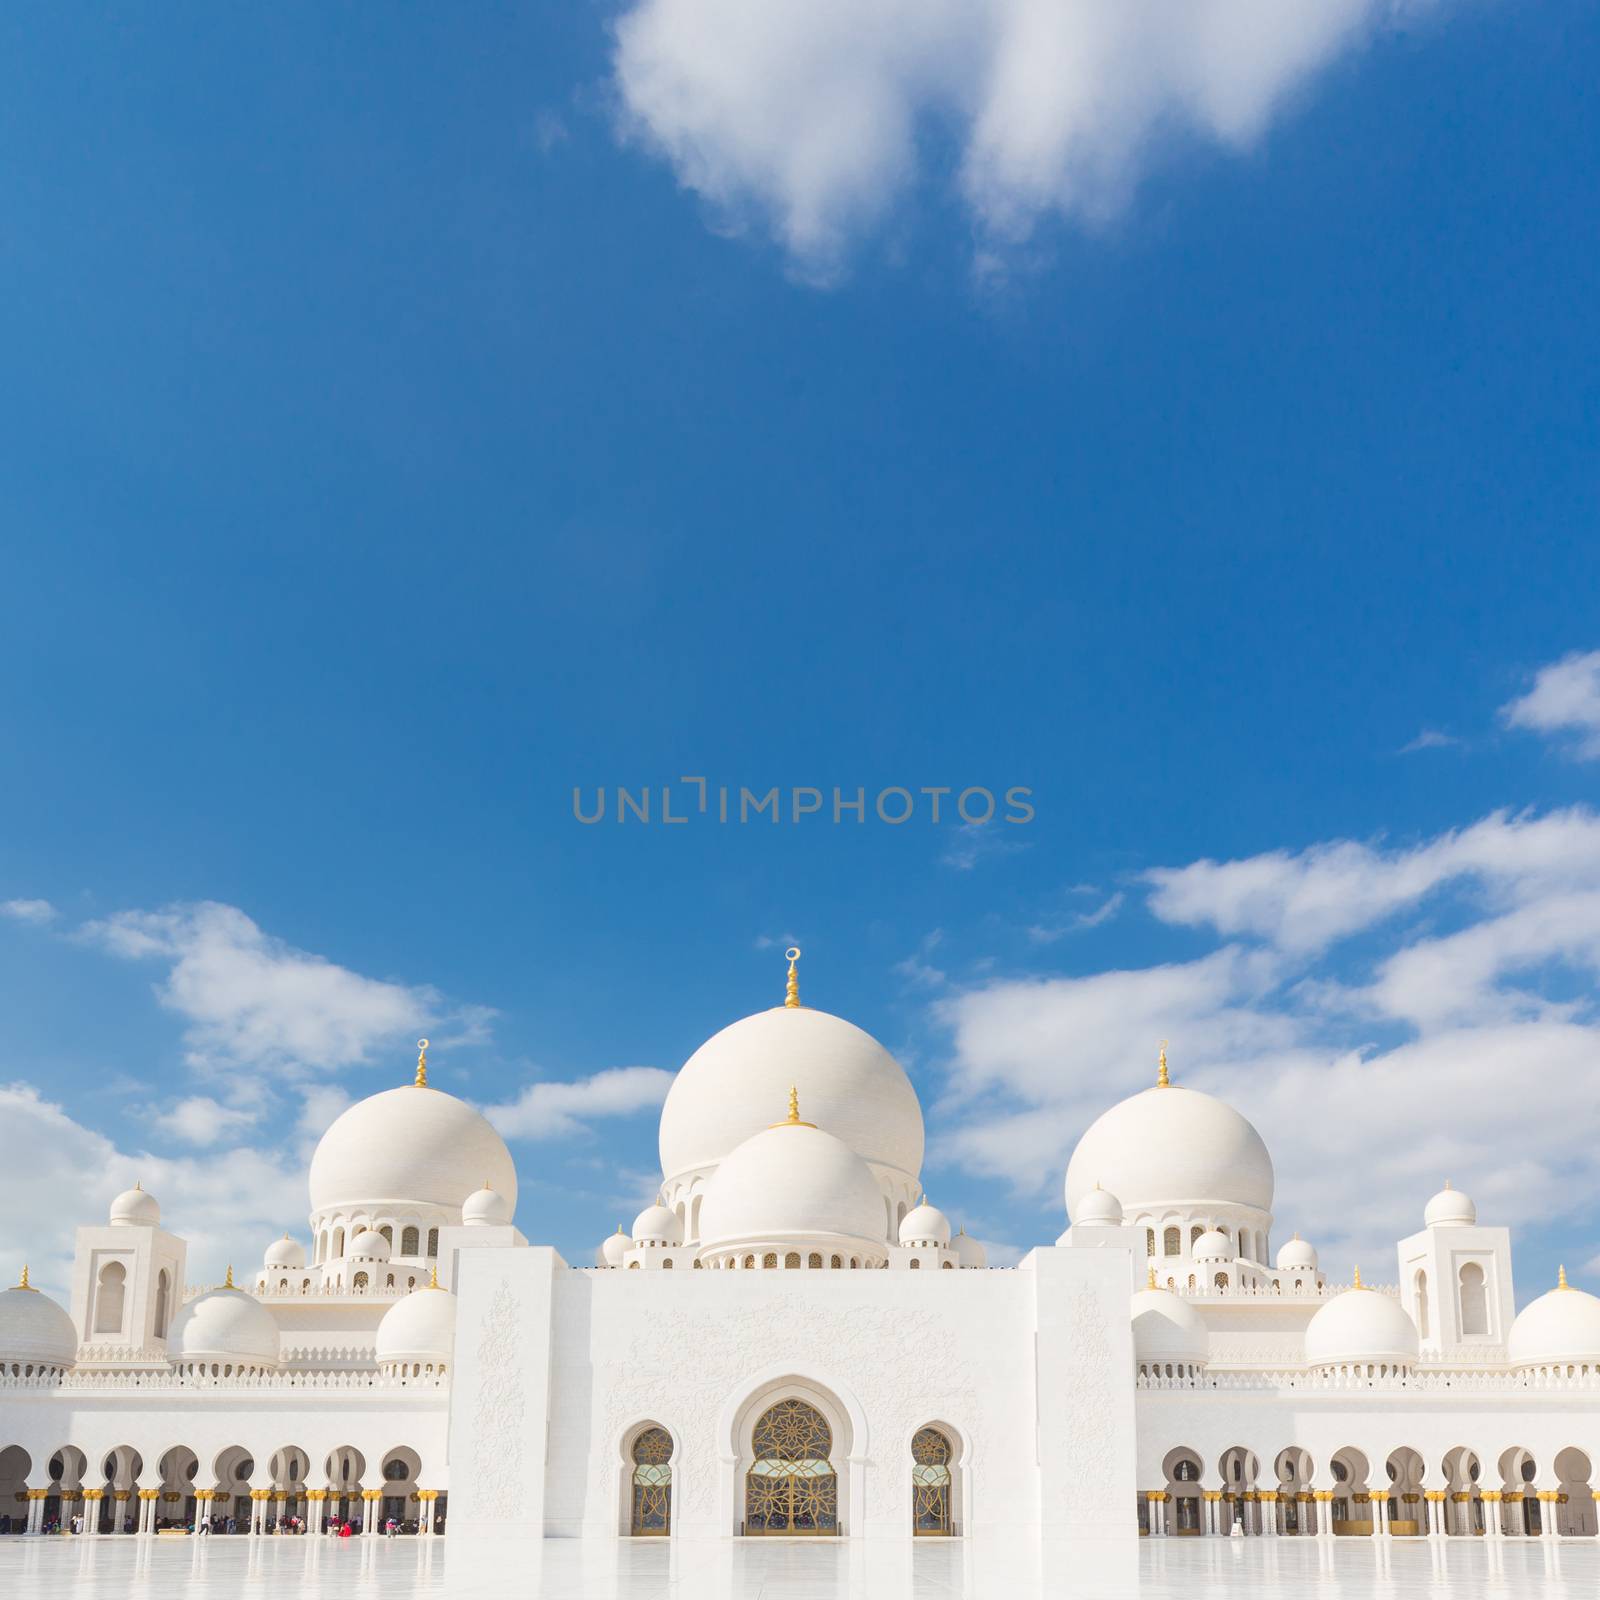 Sheikh Zayed Grand Mosque, Abu Dhabi, United Arab Emirates. by kasto